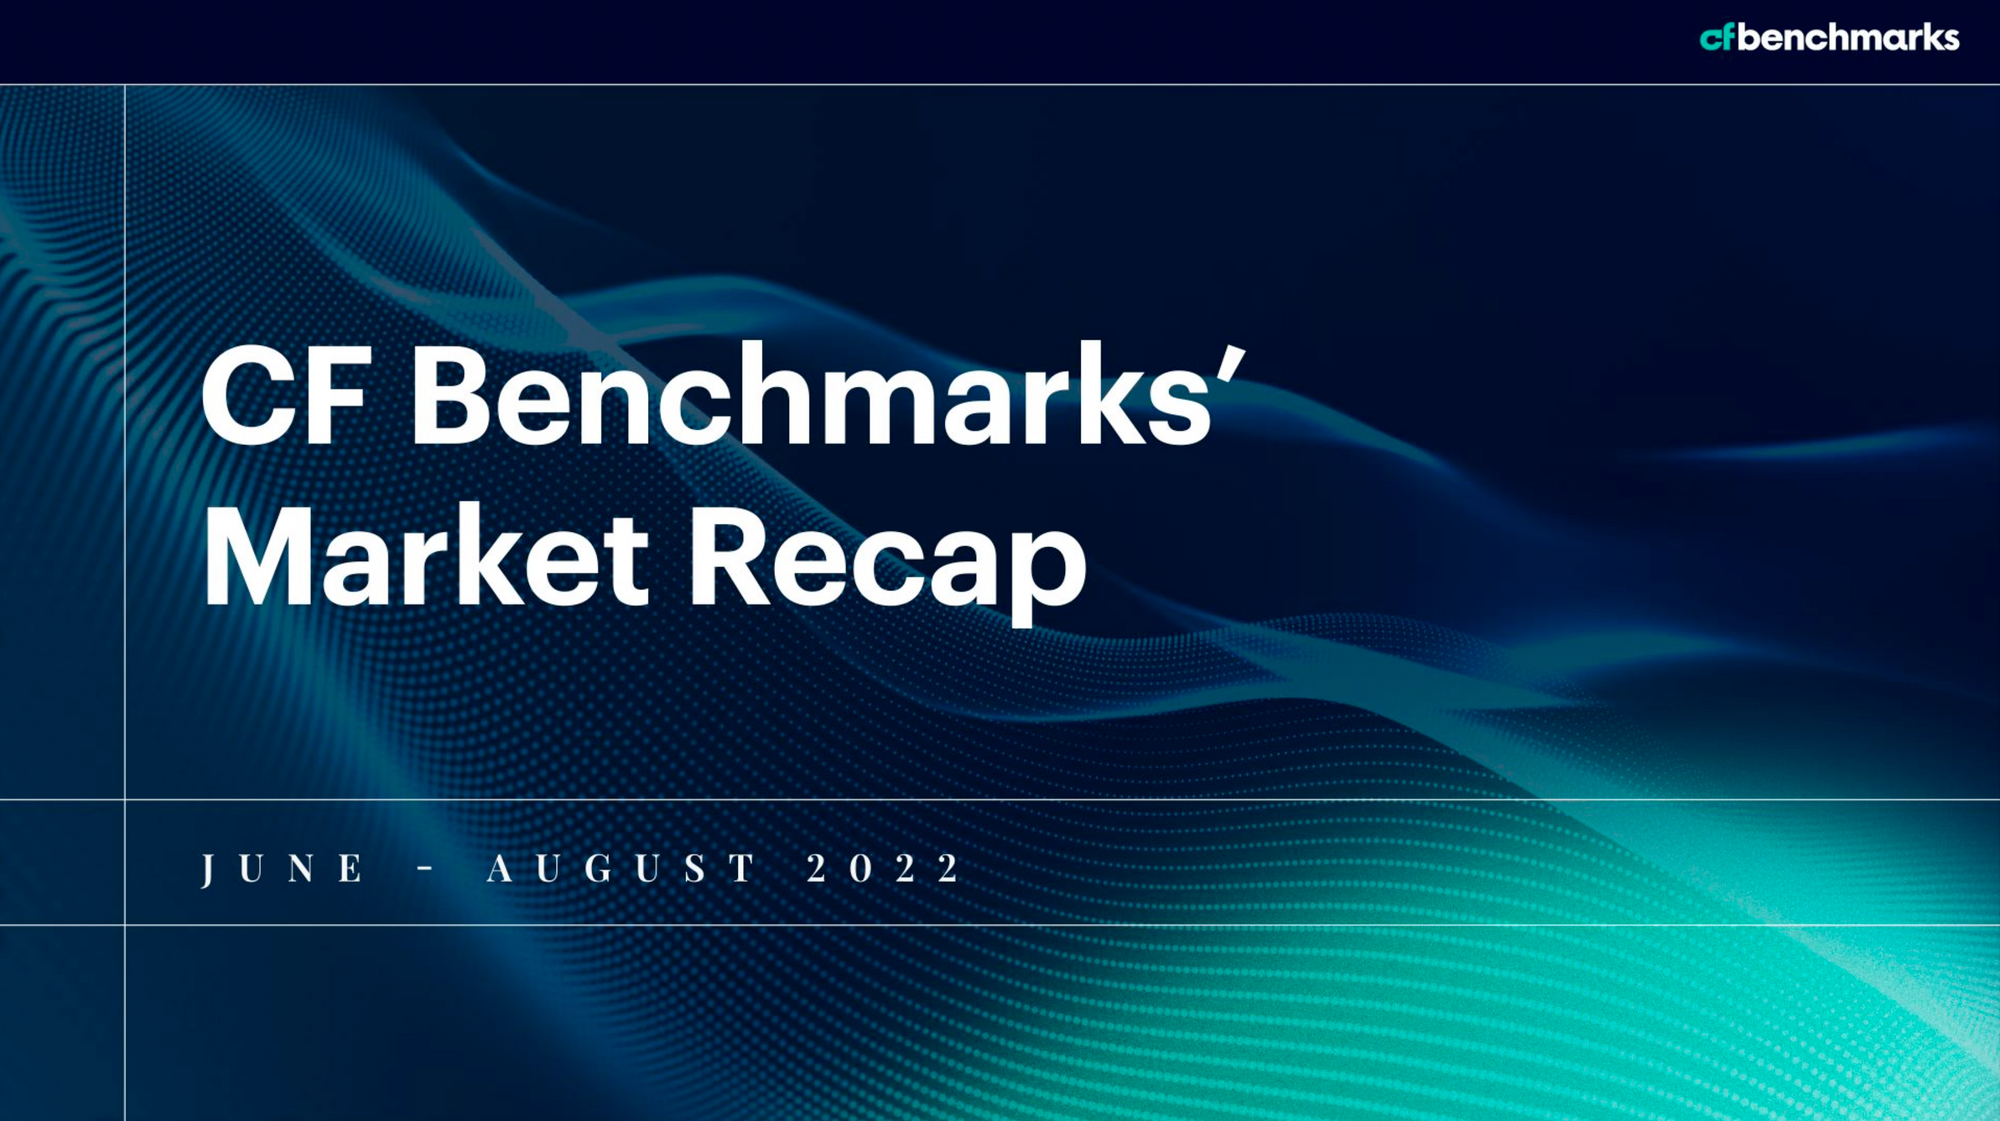 Meet CF Benchmarks' Market Recap and Quarterly Attribution Analyses